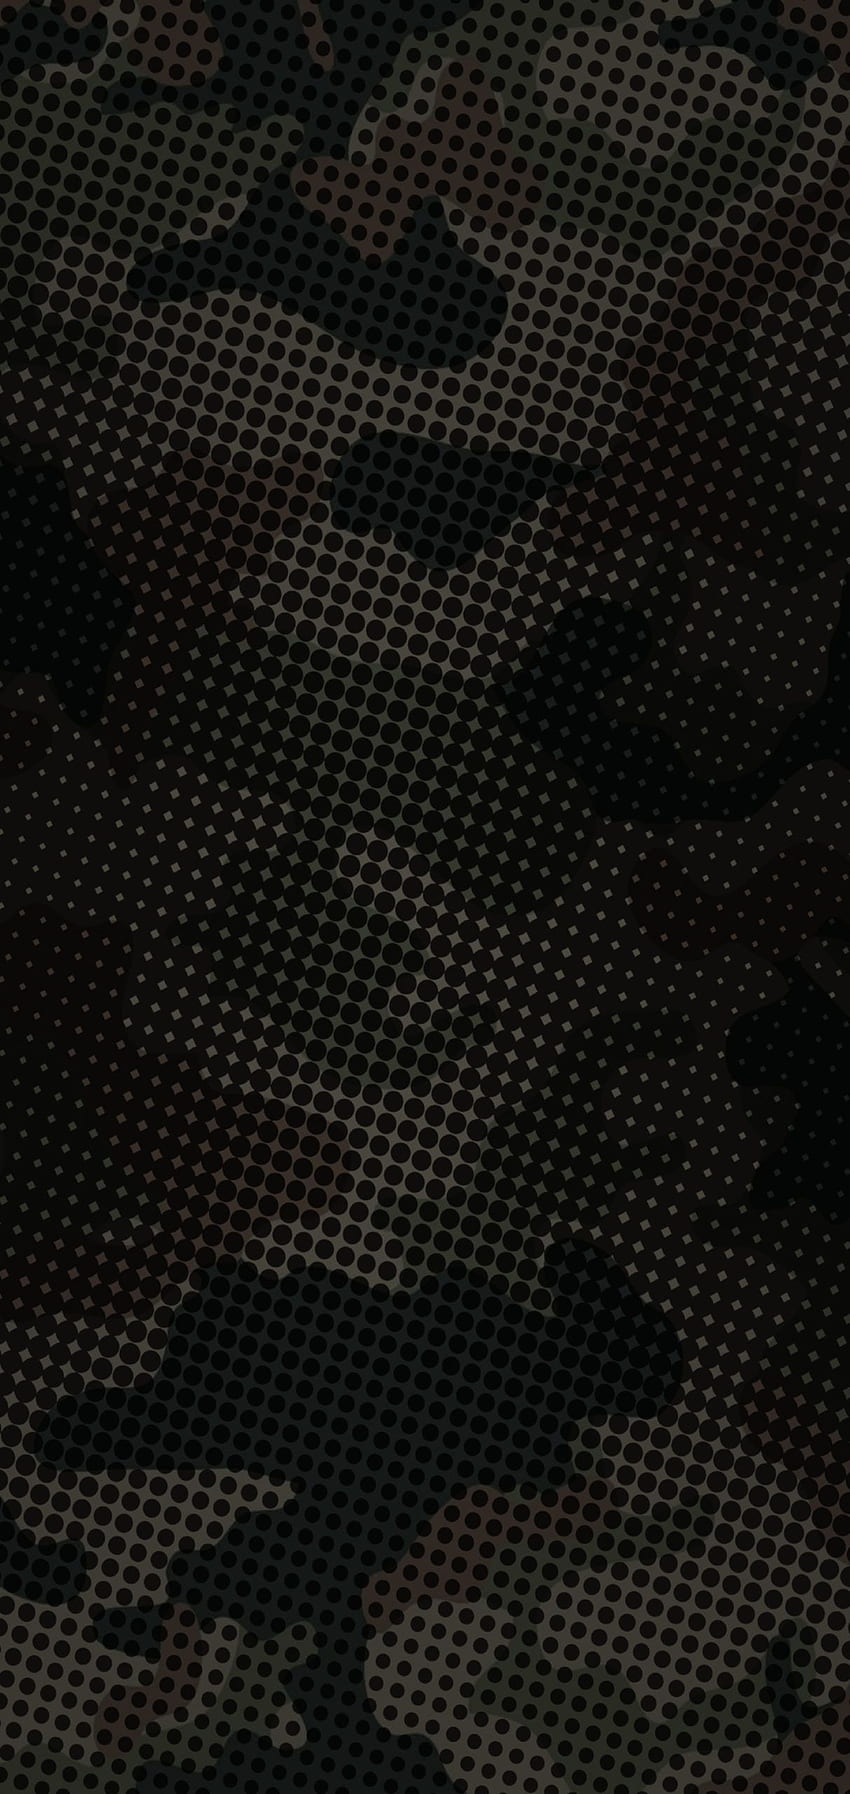 iPhoneXpapers.com | iPhone X wallpaper | vn70-galaxy-s7-dark-pattern